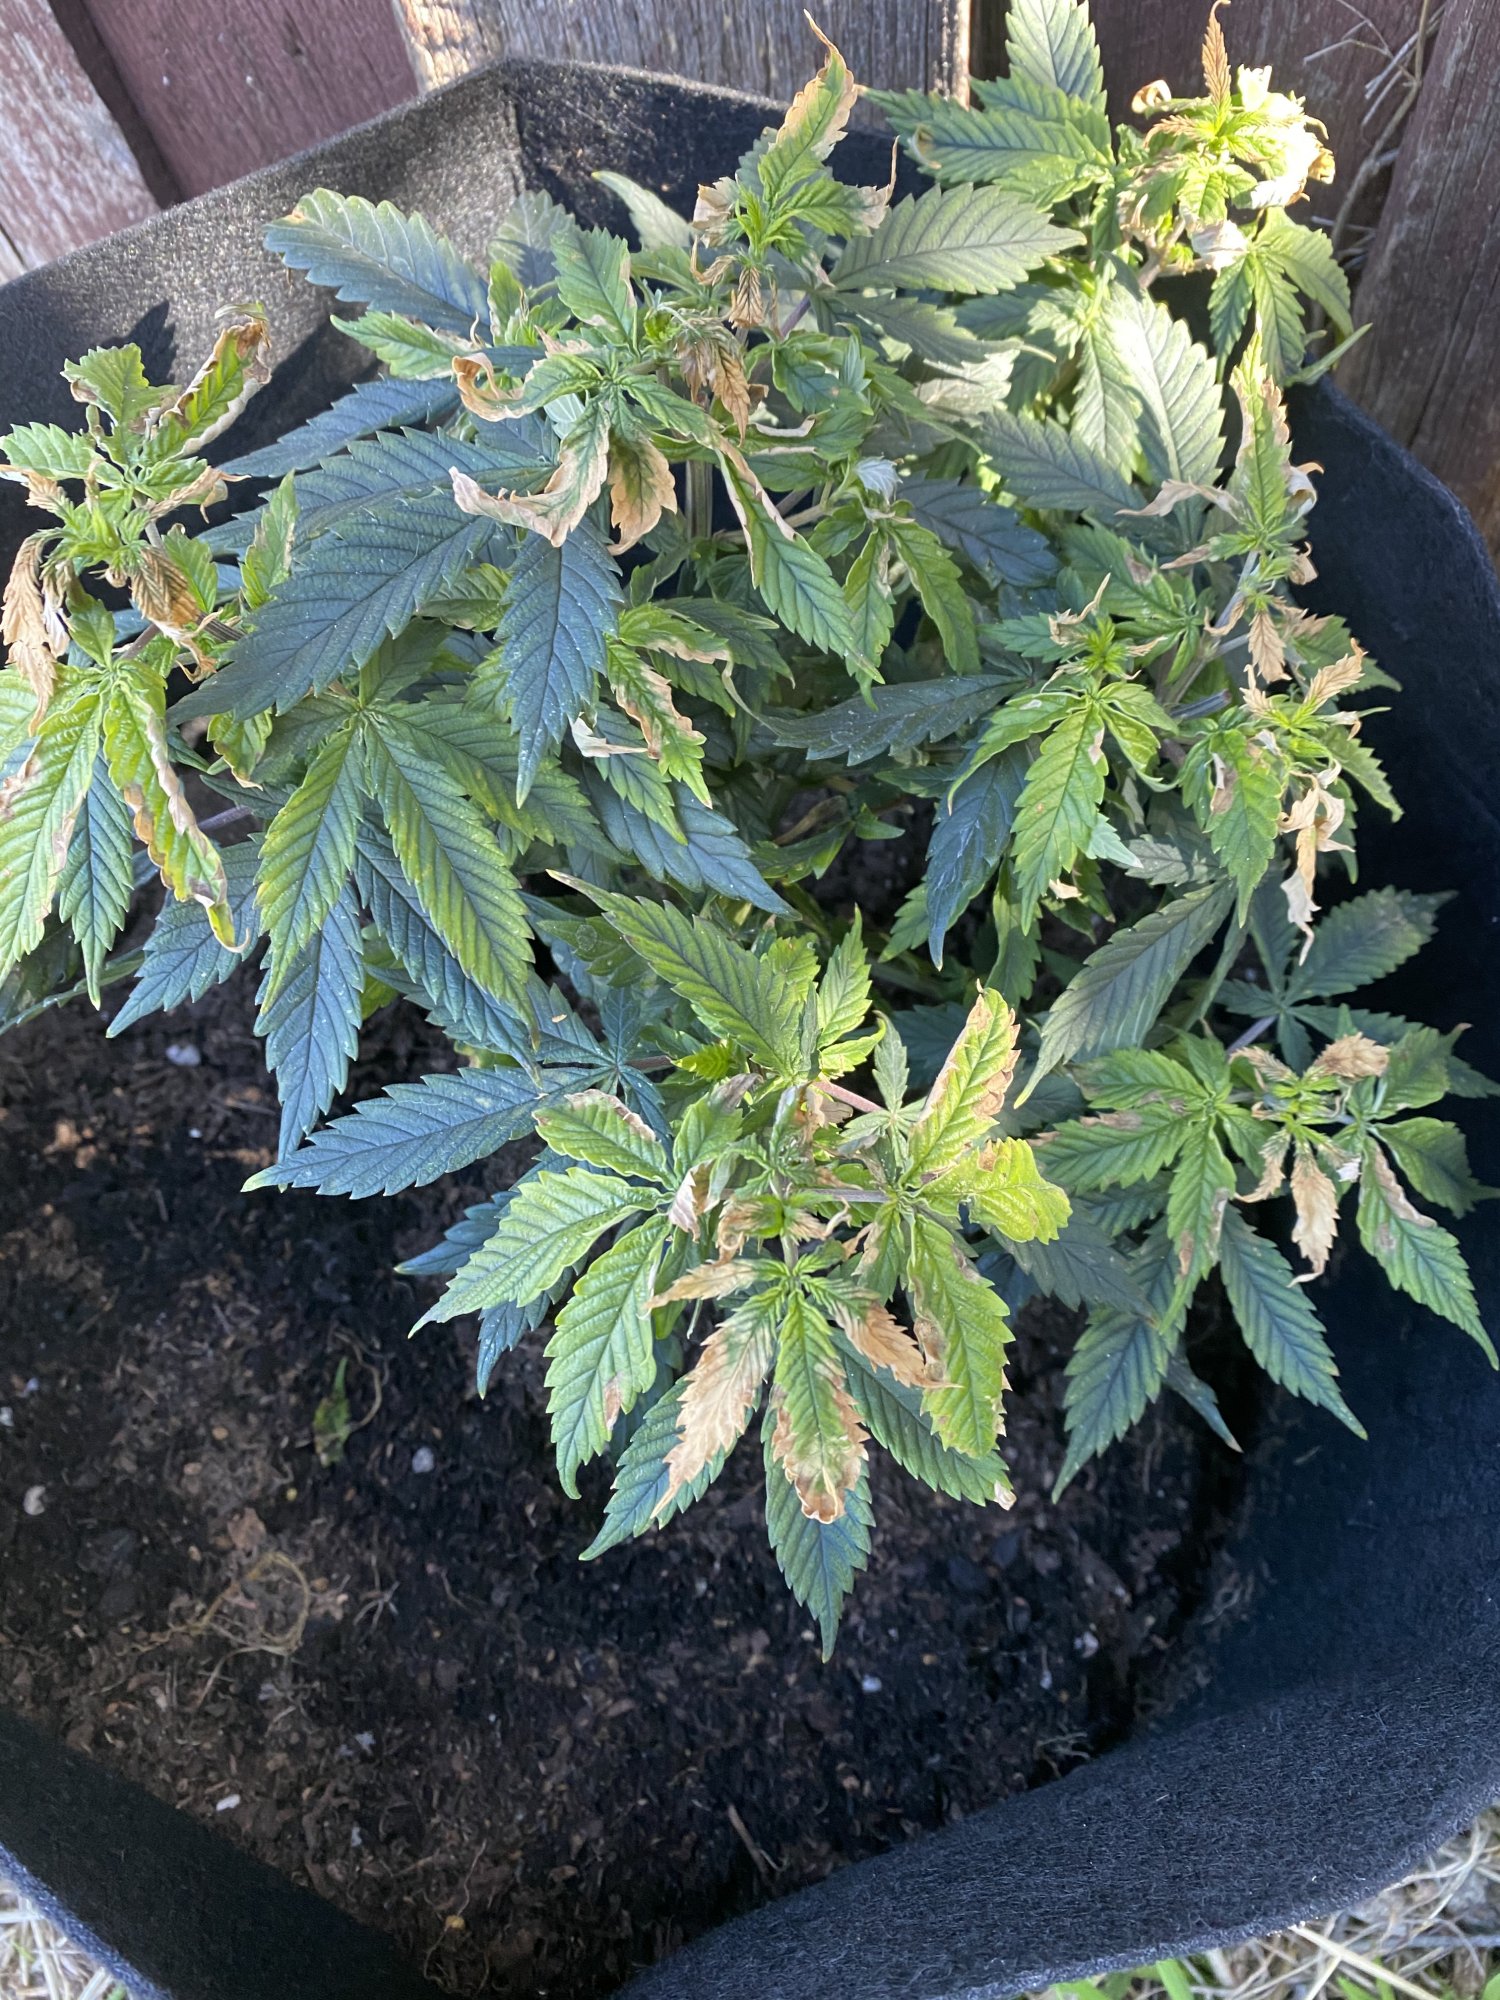 Help on my second grow